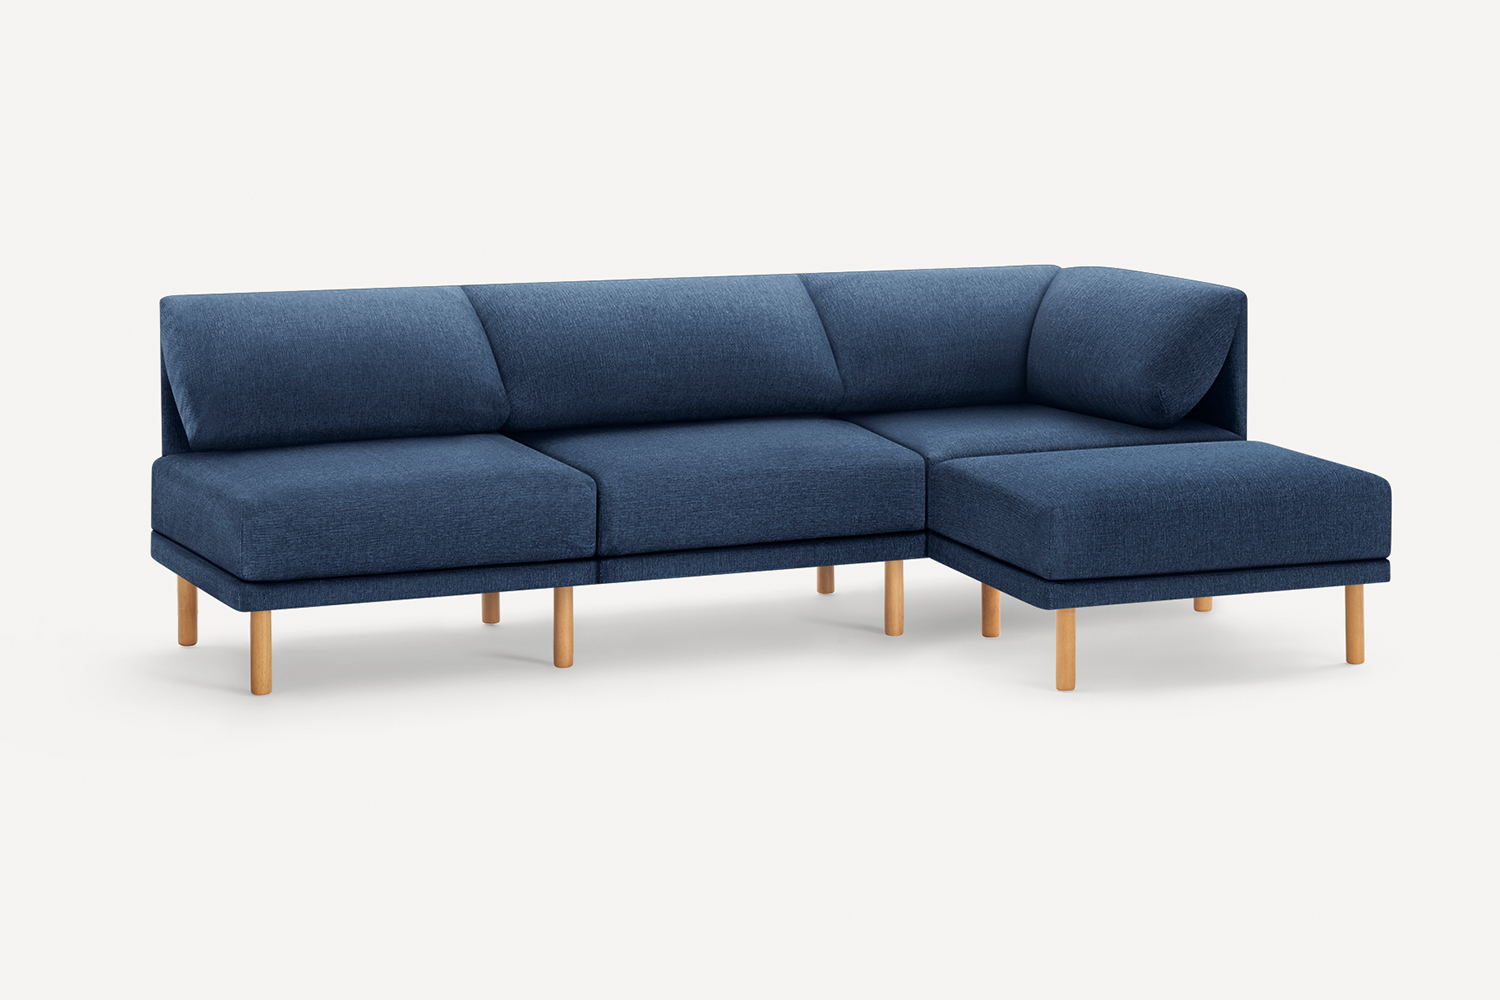 The four-piece Range Sofa from Burrow